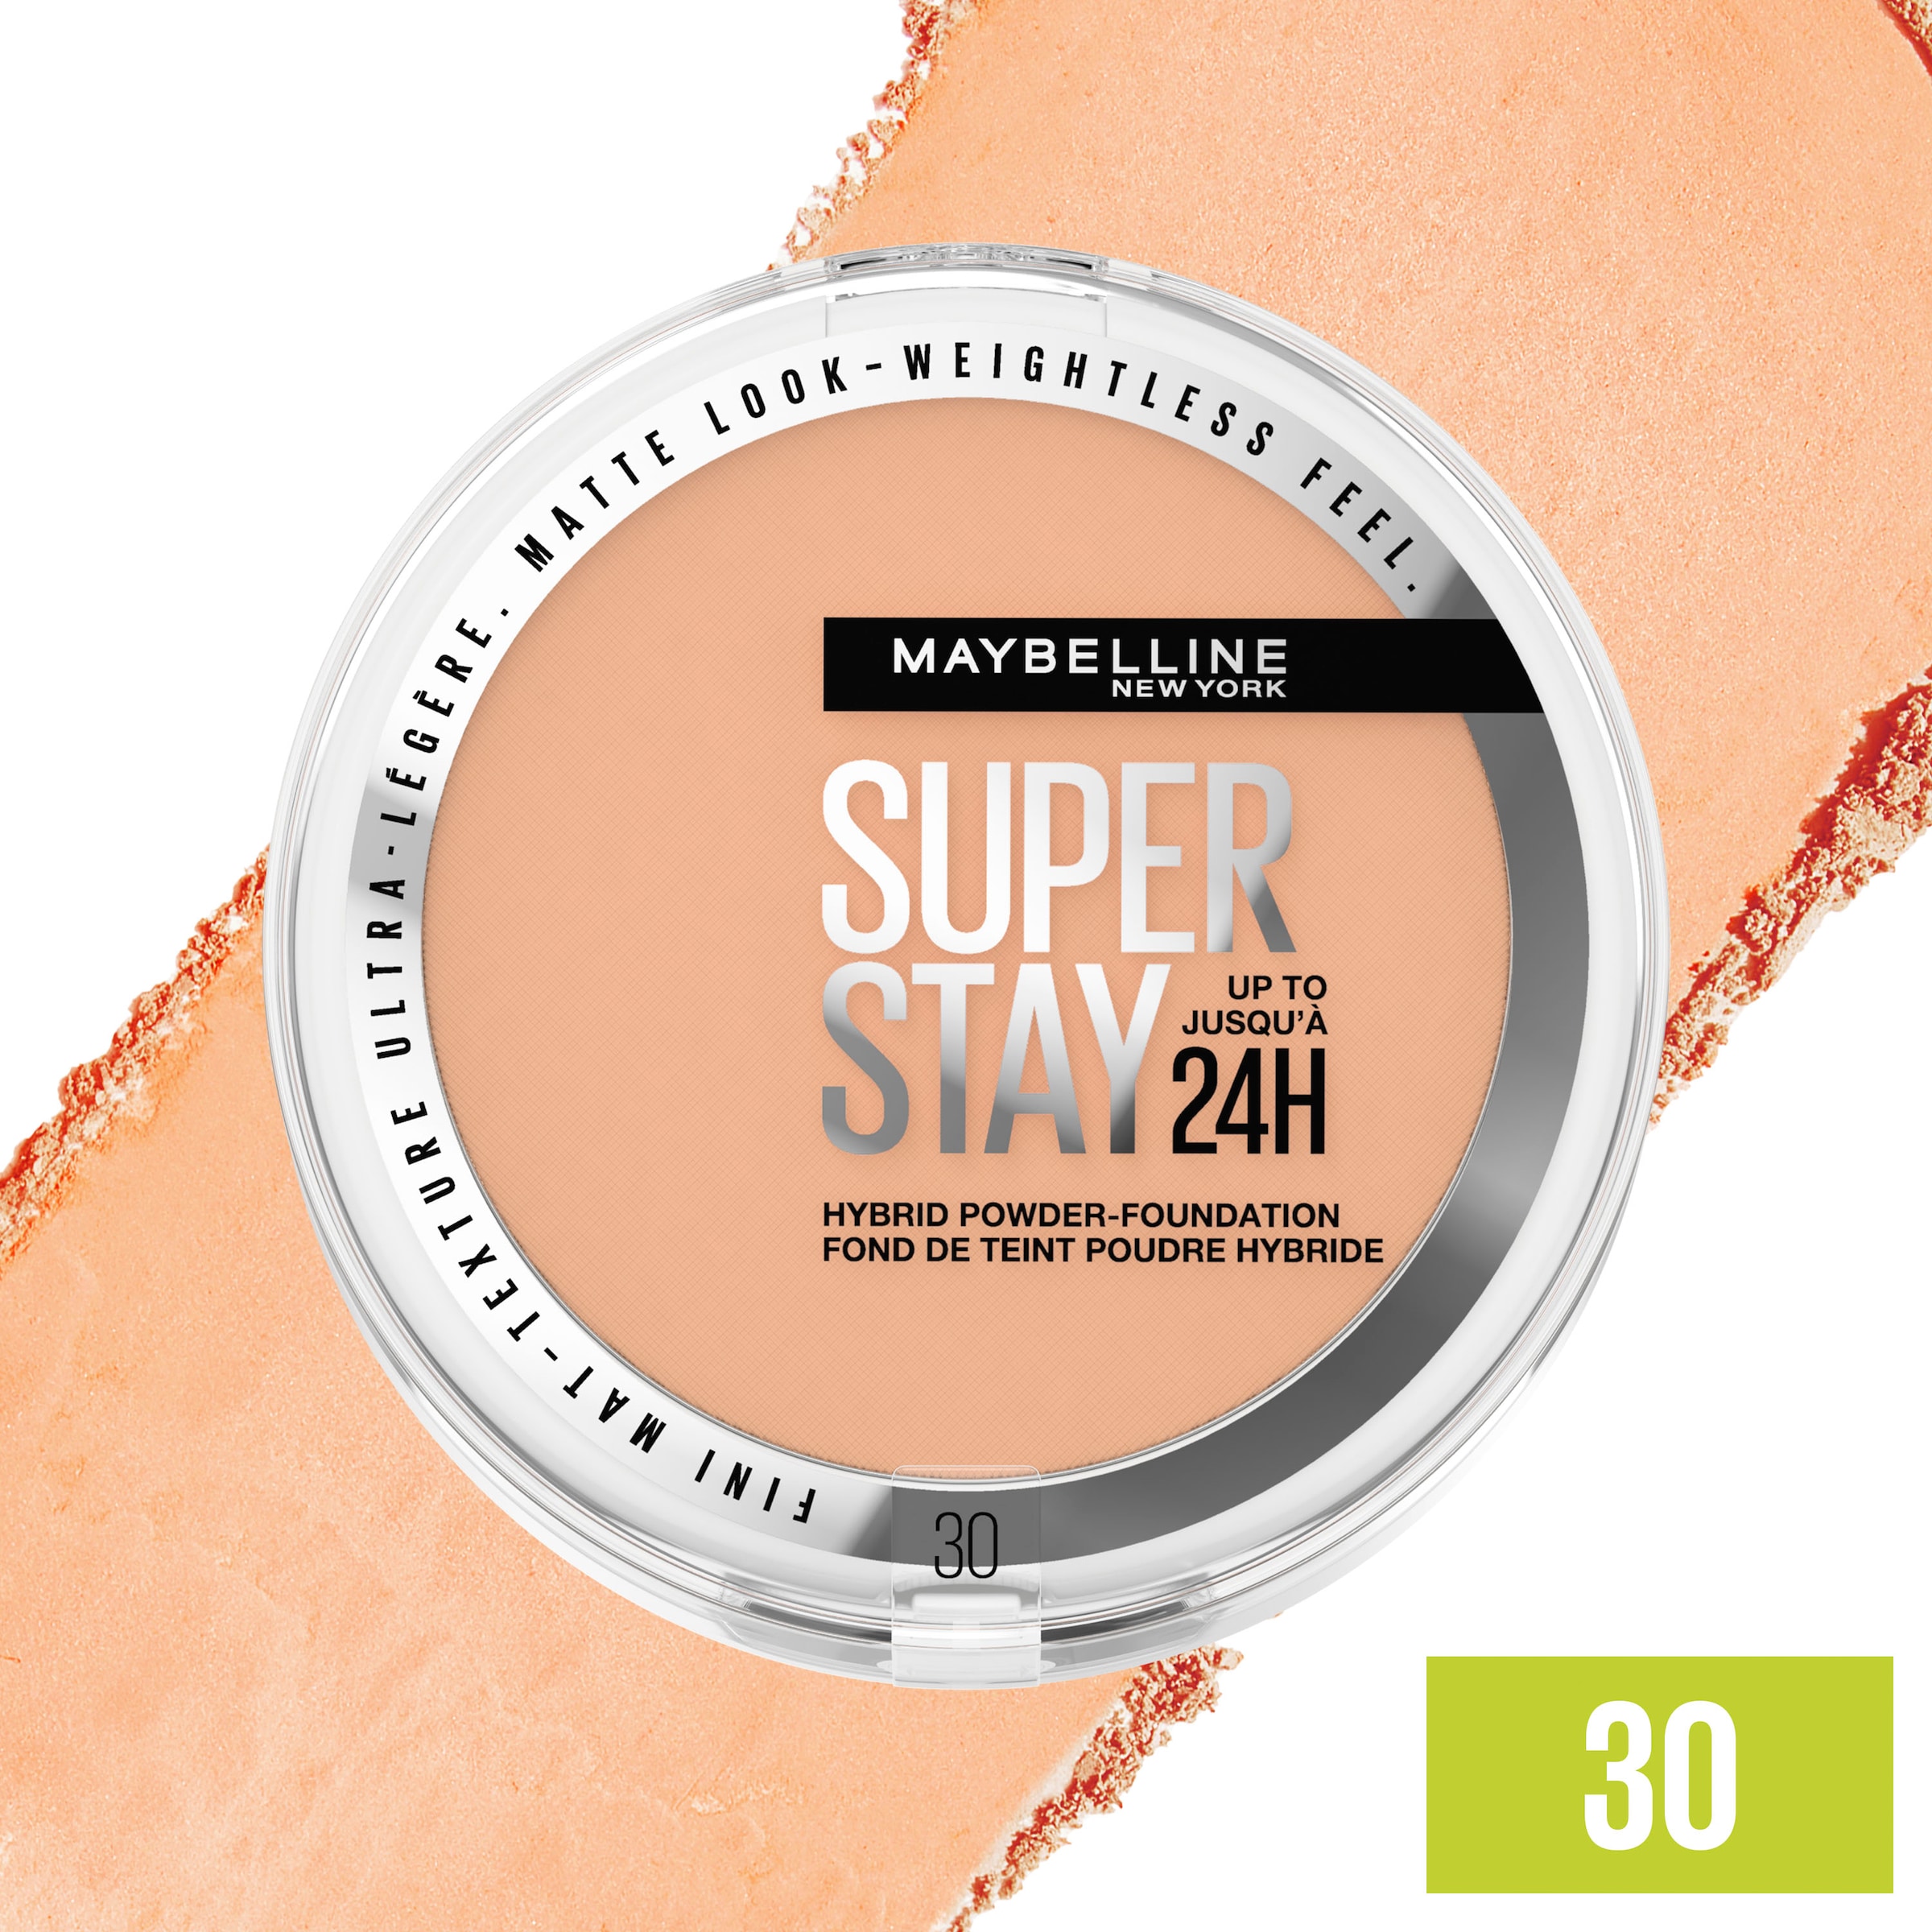 Super Foundation YORK UNIVERSAL Puder MAYBELLINE NEW Hybrides New York bestellen Stay | »Maybelline Make-Up«